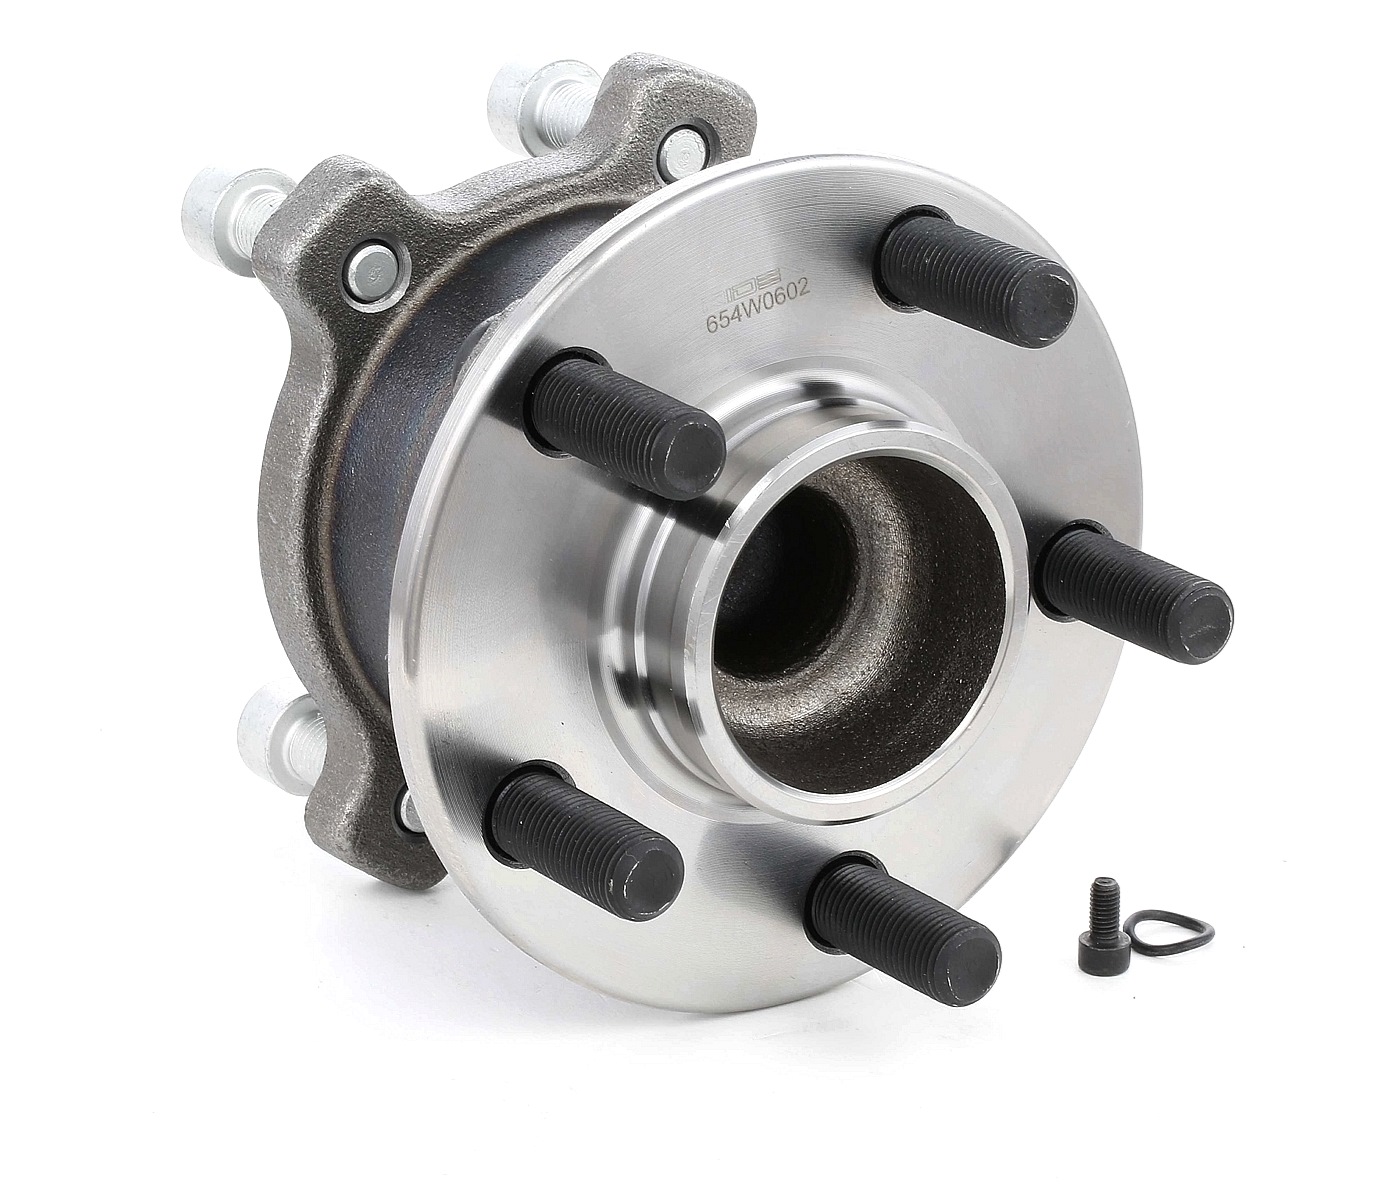 RIDEX 654W0602 Wheel bearing kit Rear Axle, 81 mm